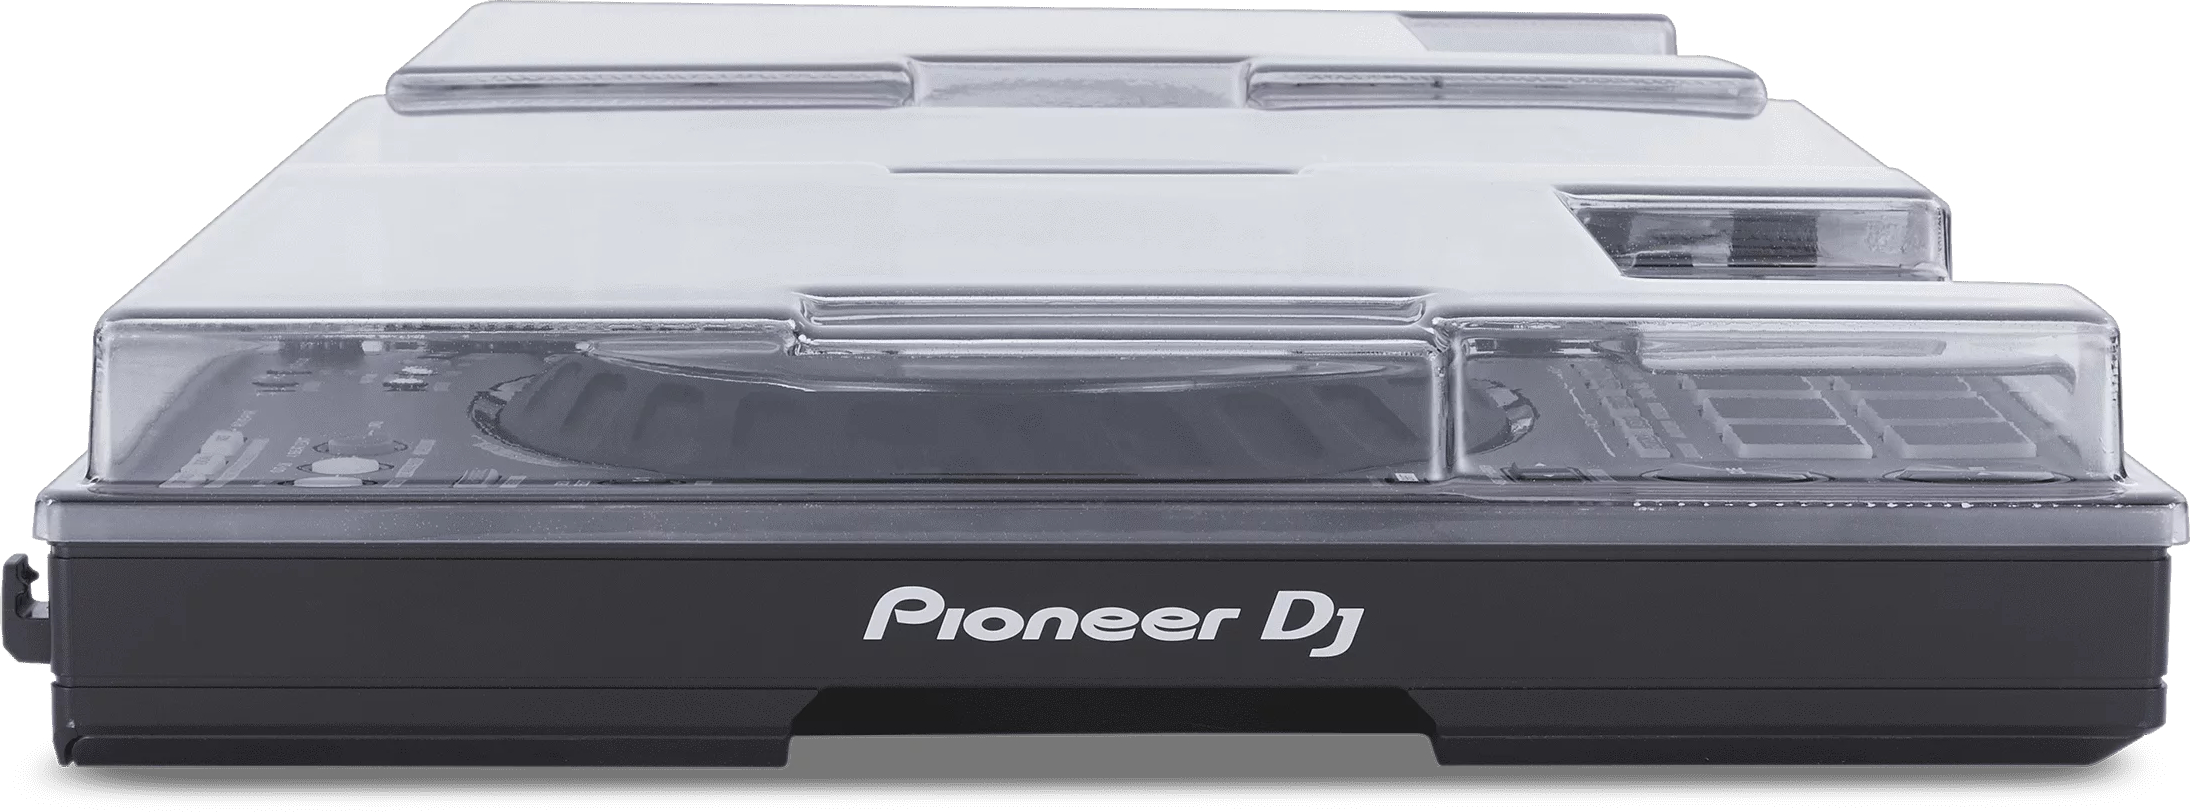 Decksaver Pioneer Dj Ddj-flx10 - Housse Dj - Variation 1